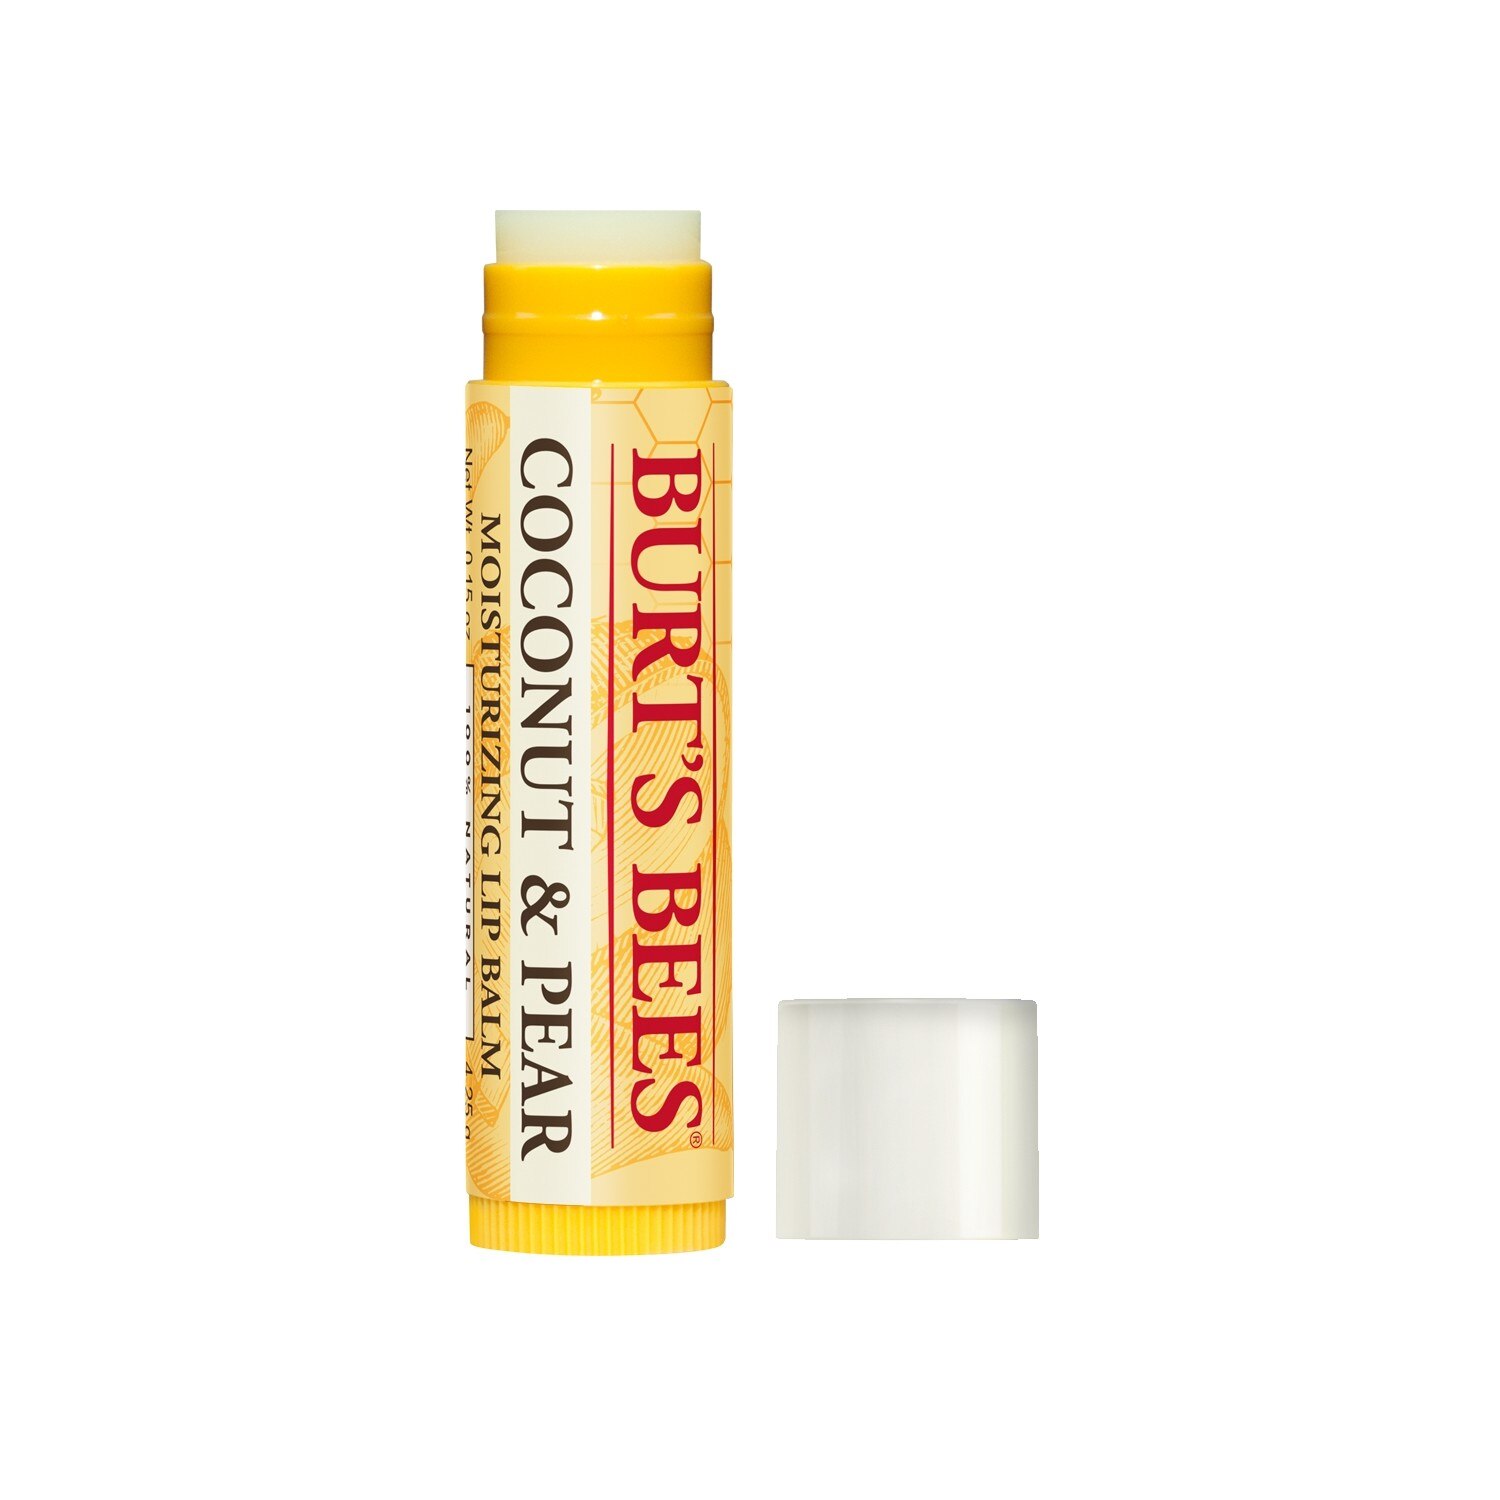 Burt's Bees Natural Lip Balm Coconut, 0.15 OZ